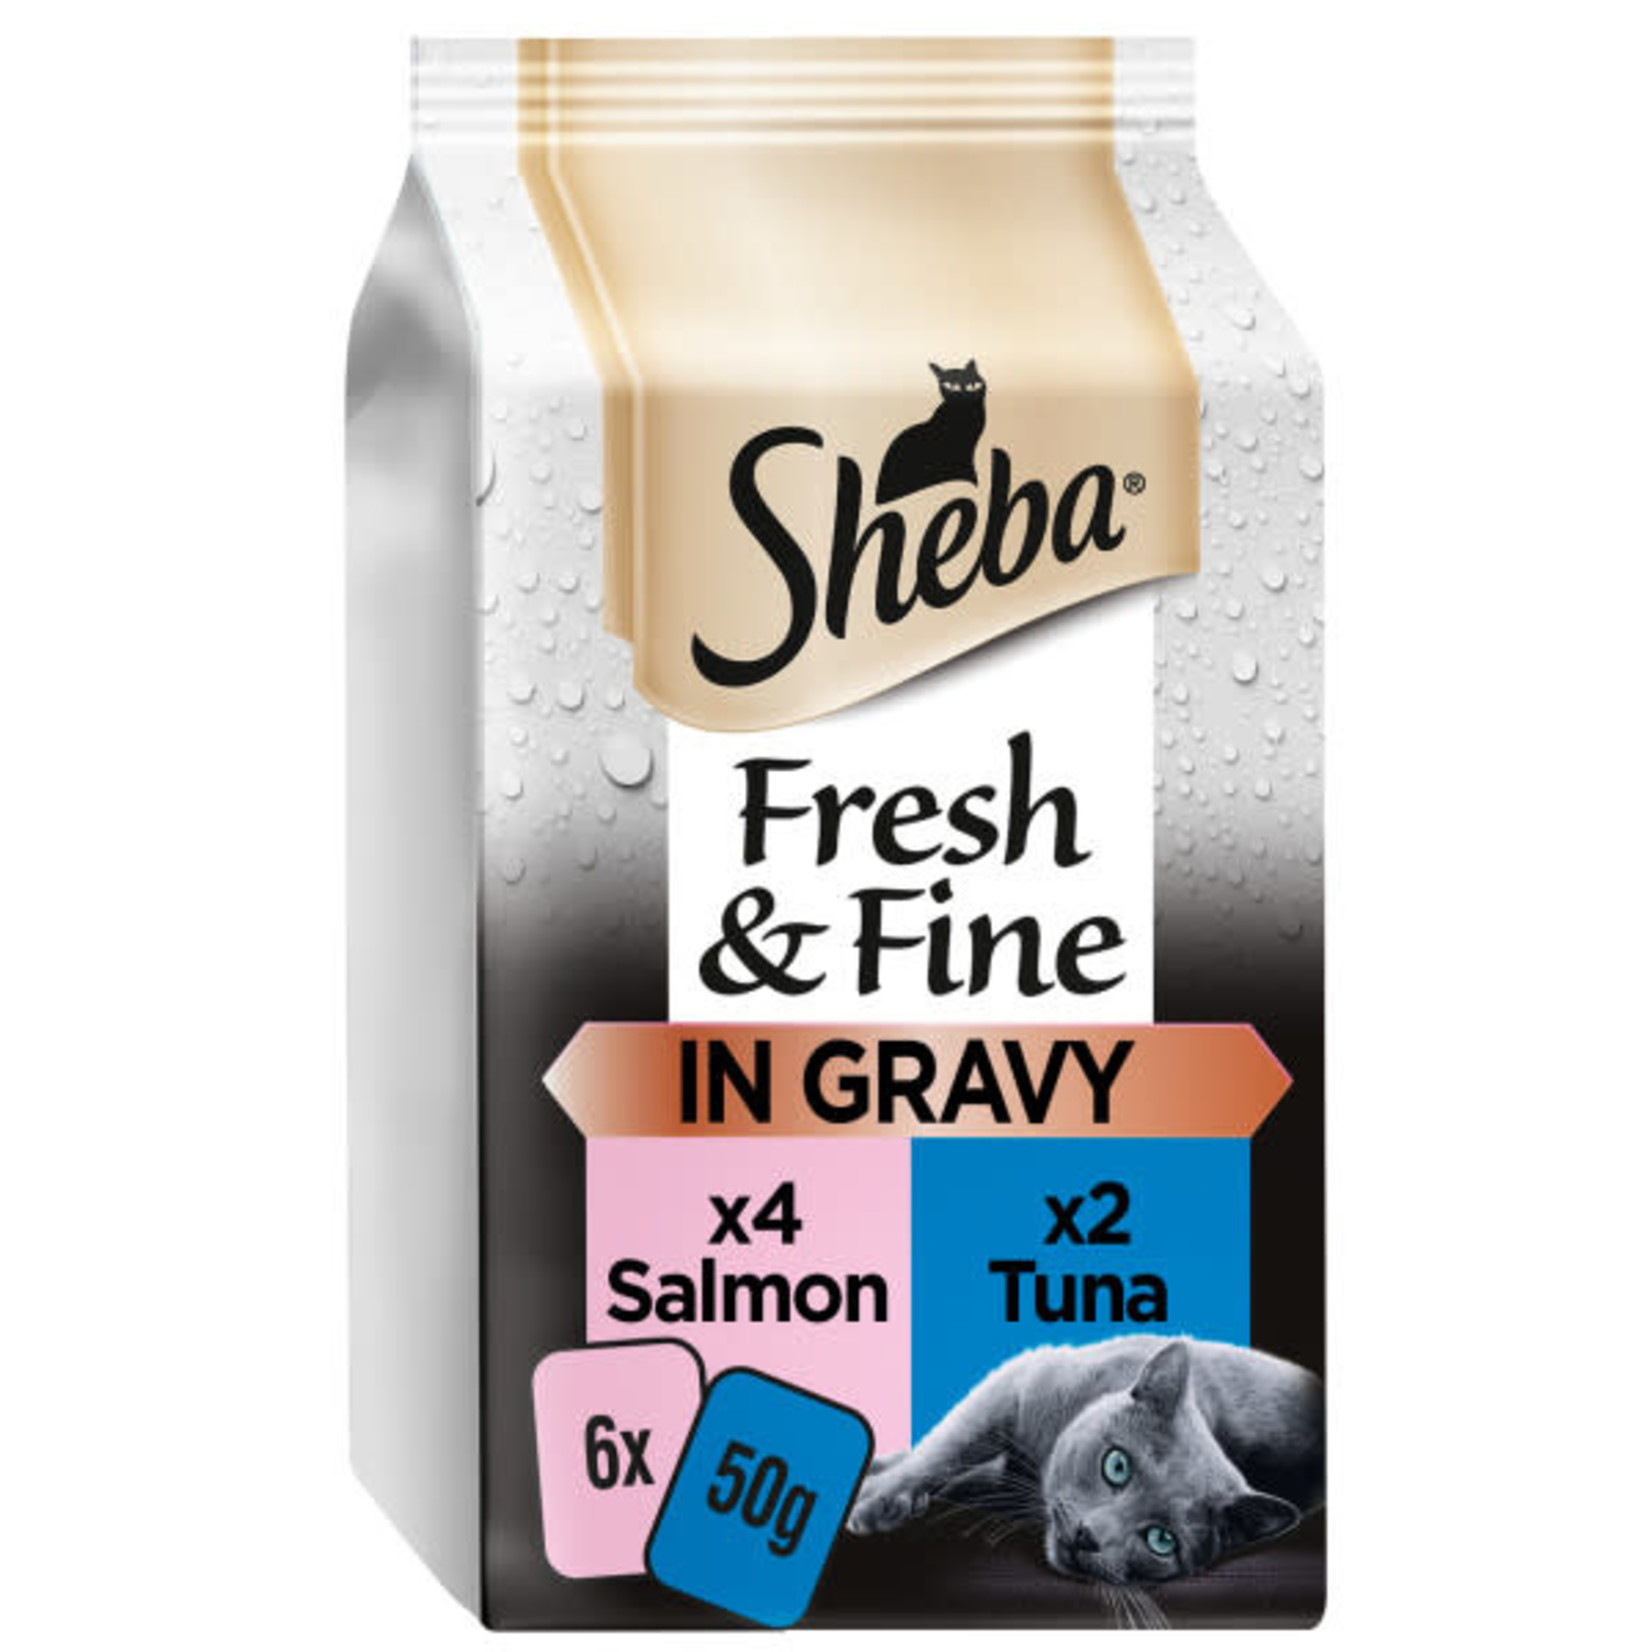 Sheba Fresh & Fine Adult & Senior Cat Wet Food Pouch Salmon & Tuna in Gravy, 6 x 50g